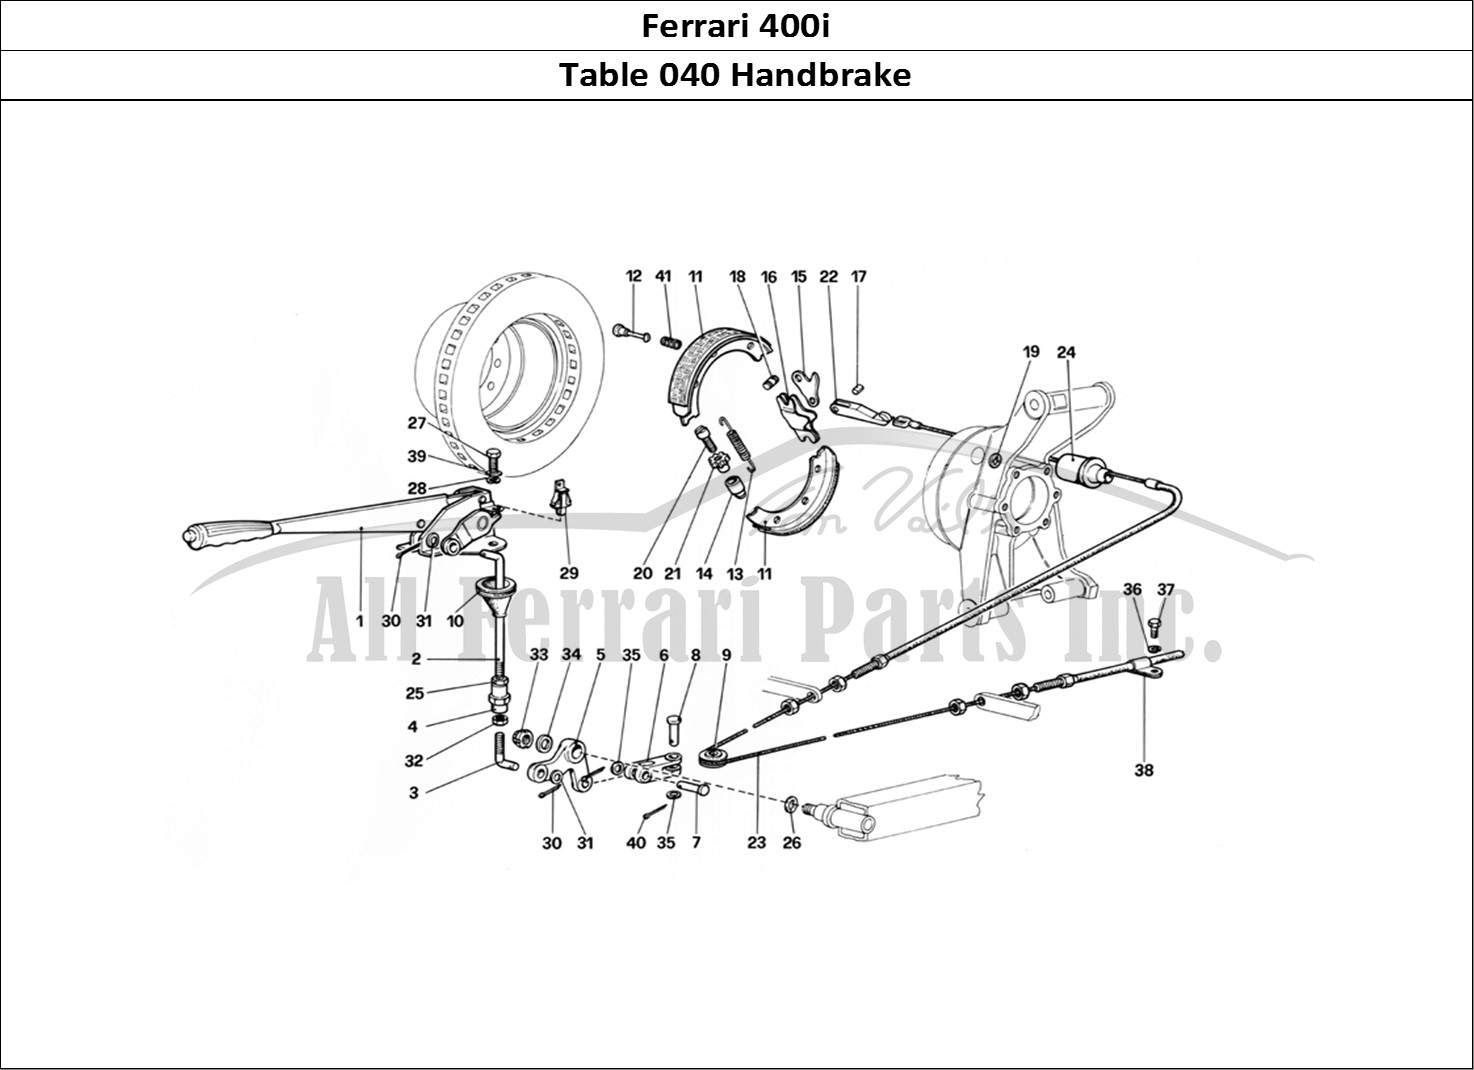 Ferrari Parts Ferrari 400i (1983 Mechanical) Page 040 Hand-Brake Controll